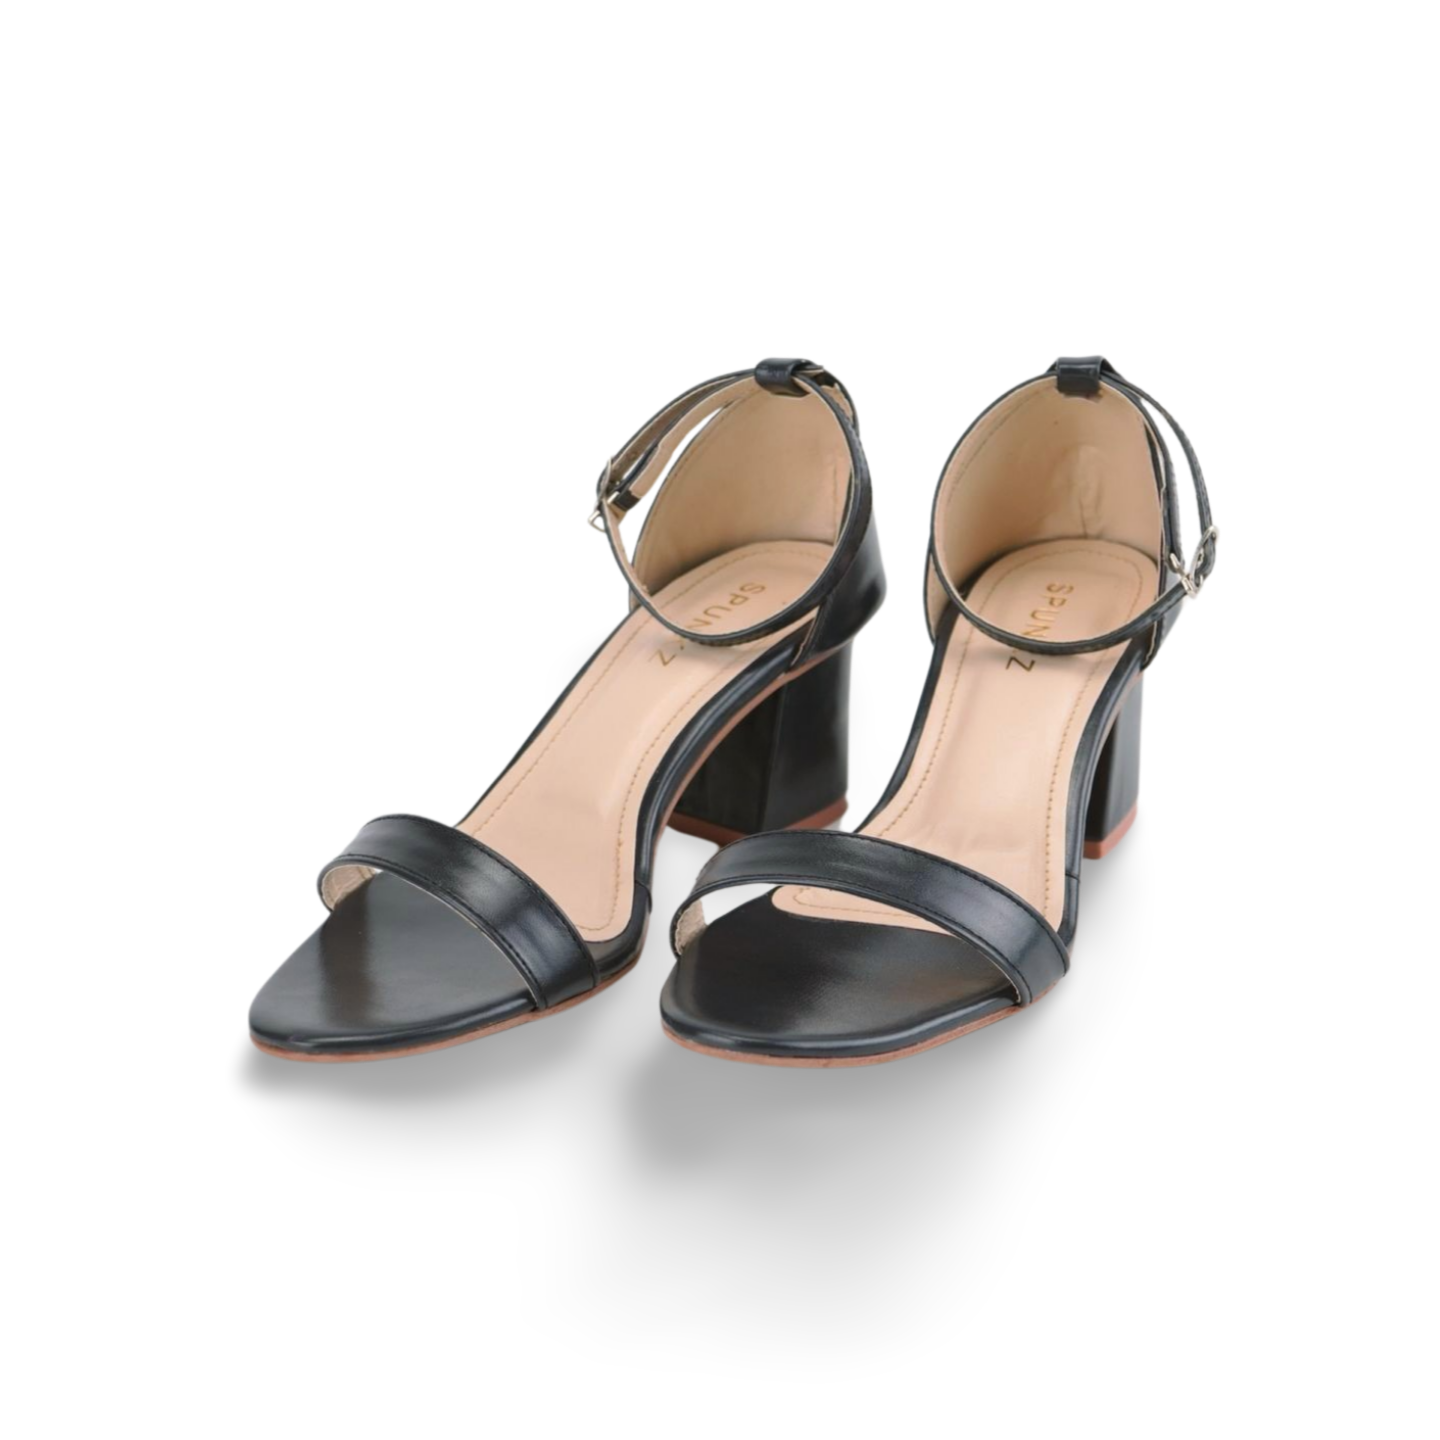 Elegant Women's High Heel Block Sandals with Adjustable Ankle Strap